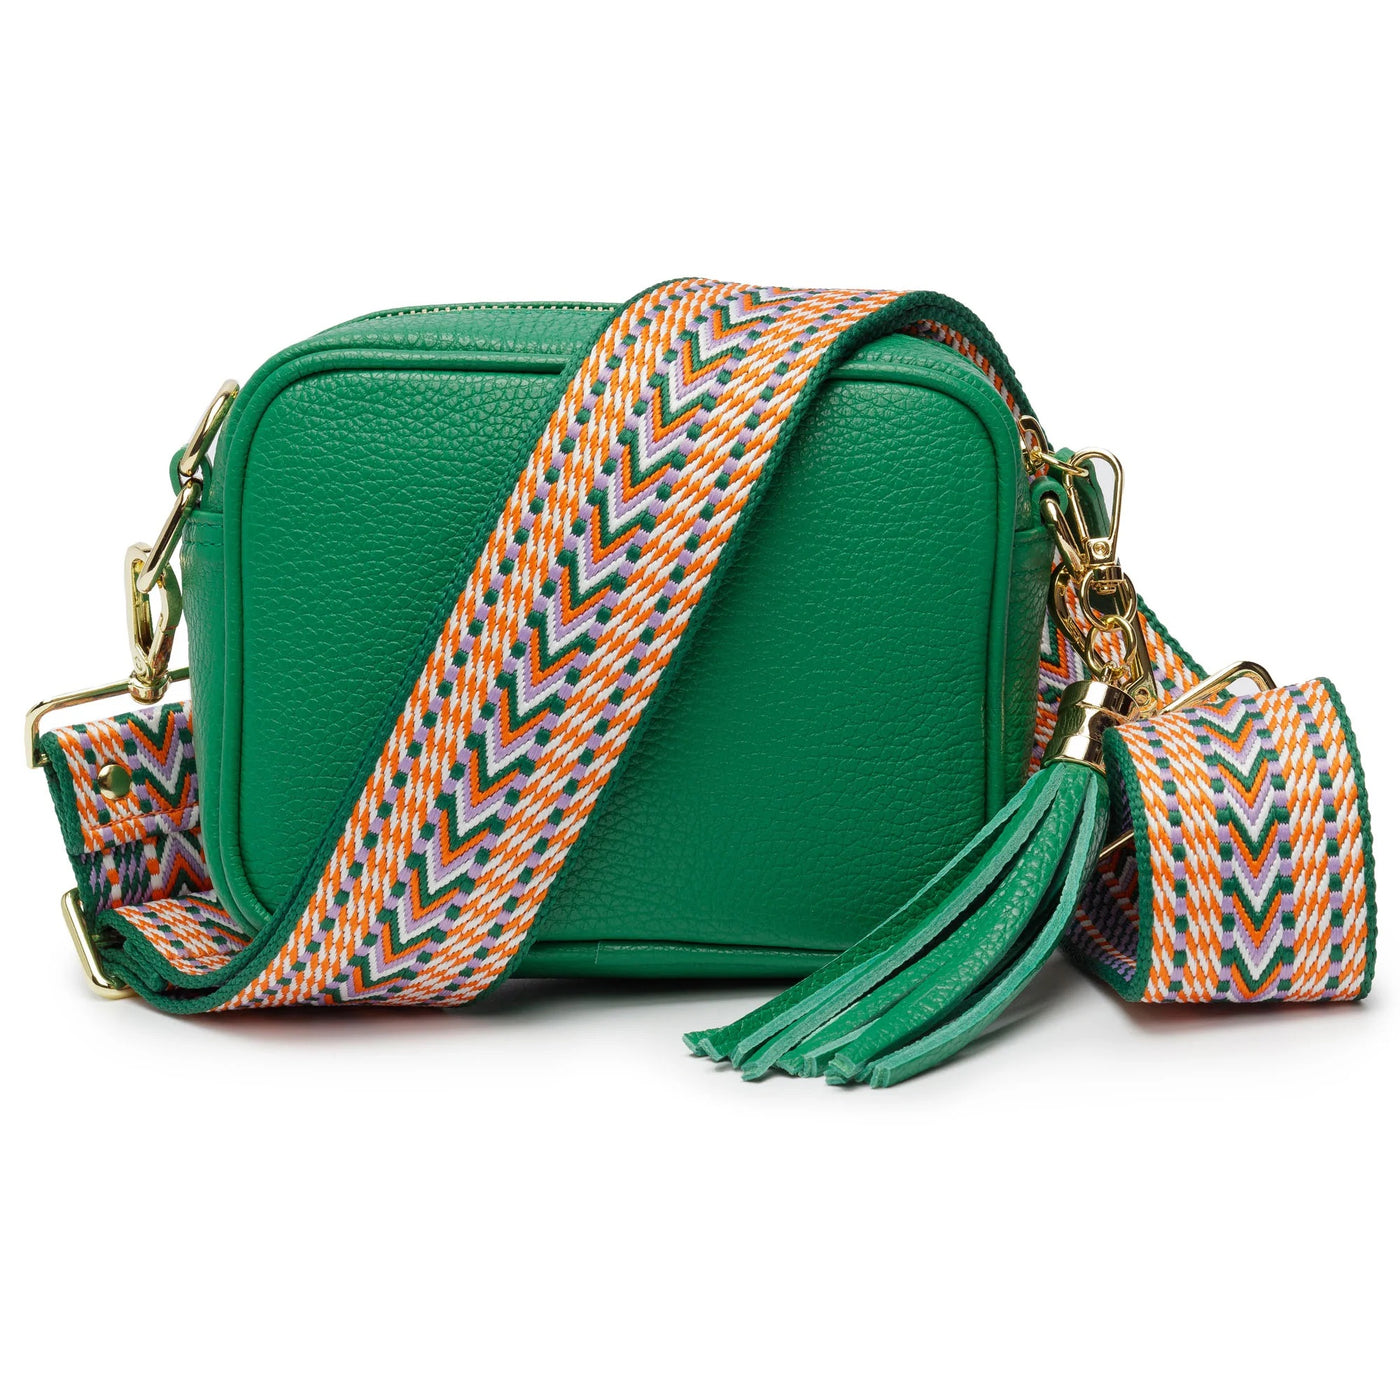 Elie Beaumont Designer Leather MINI Crossbody Bag - Emerald (Bright Green) GOLD Fittings